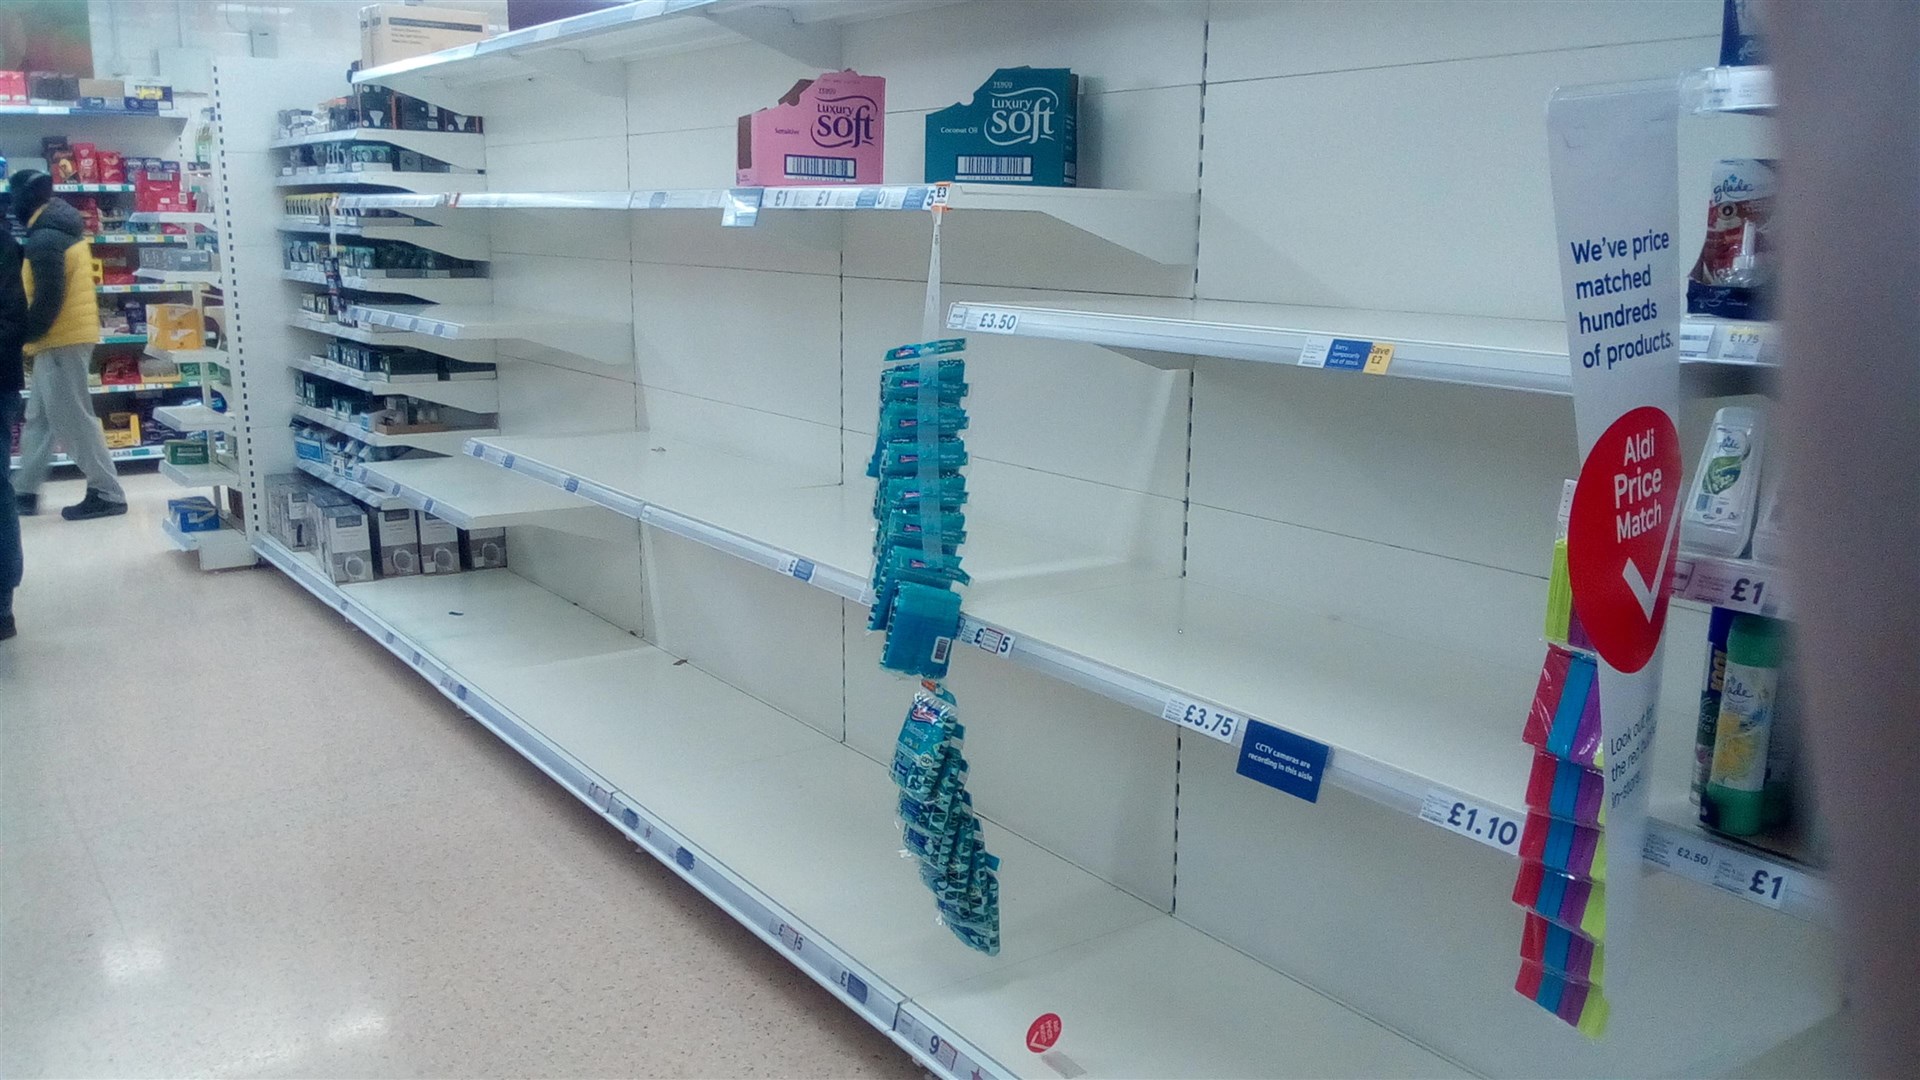 The shelves emptied of loo roll in Tesco in Aviemore last week.